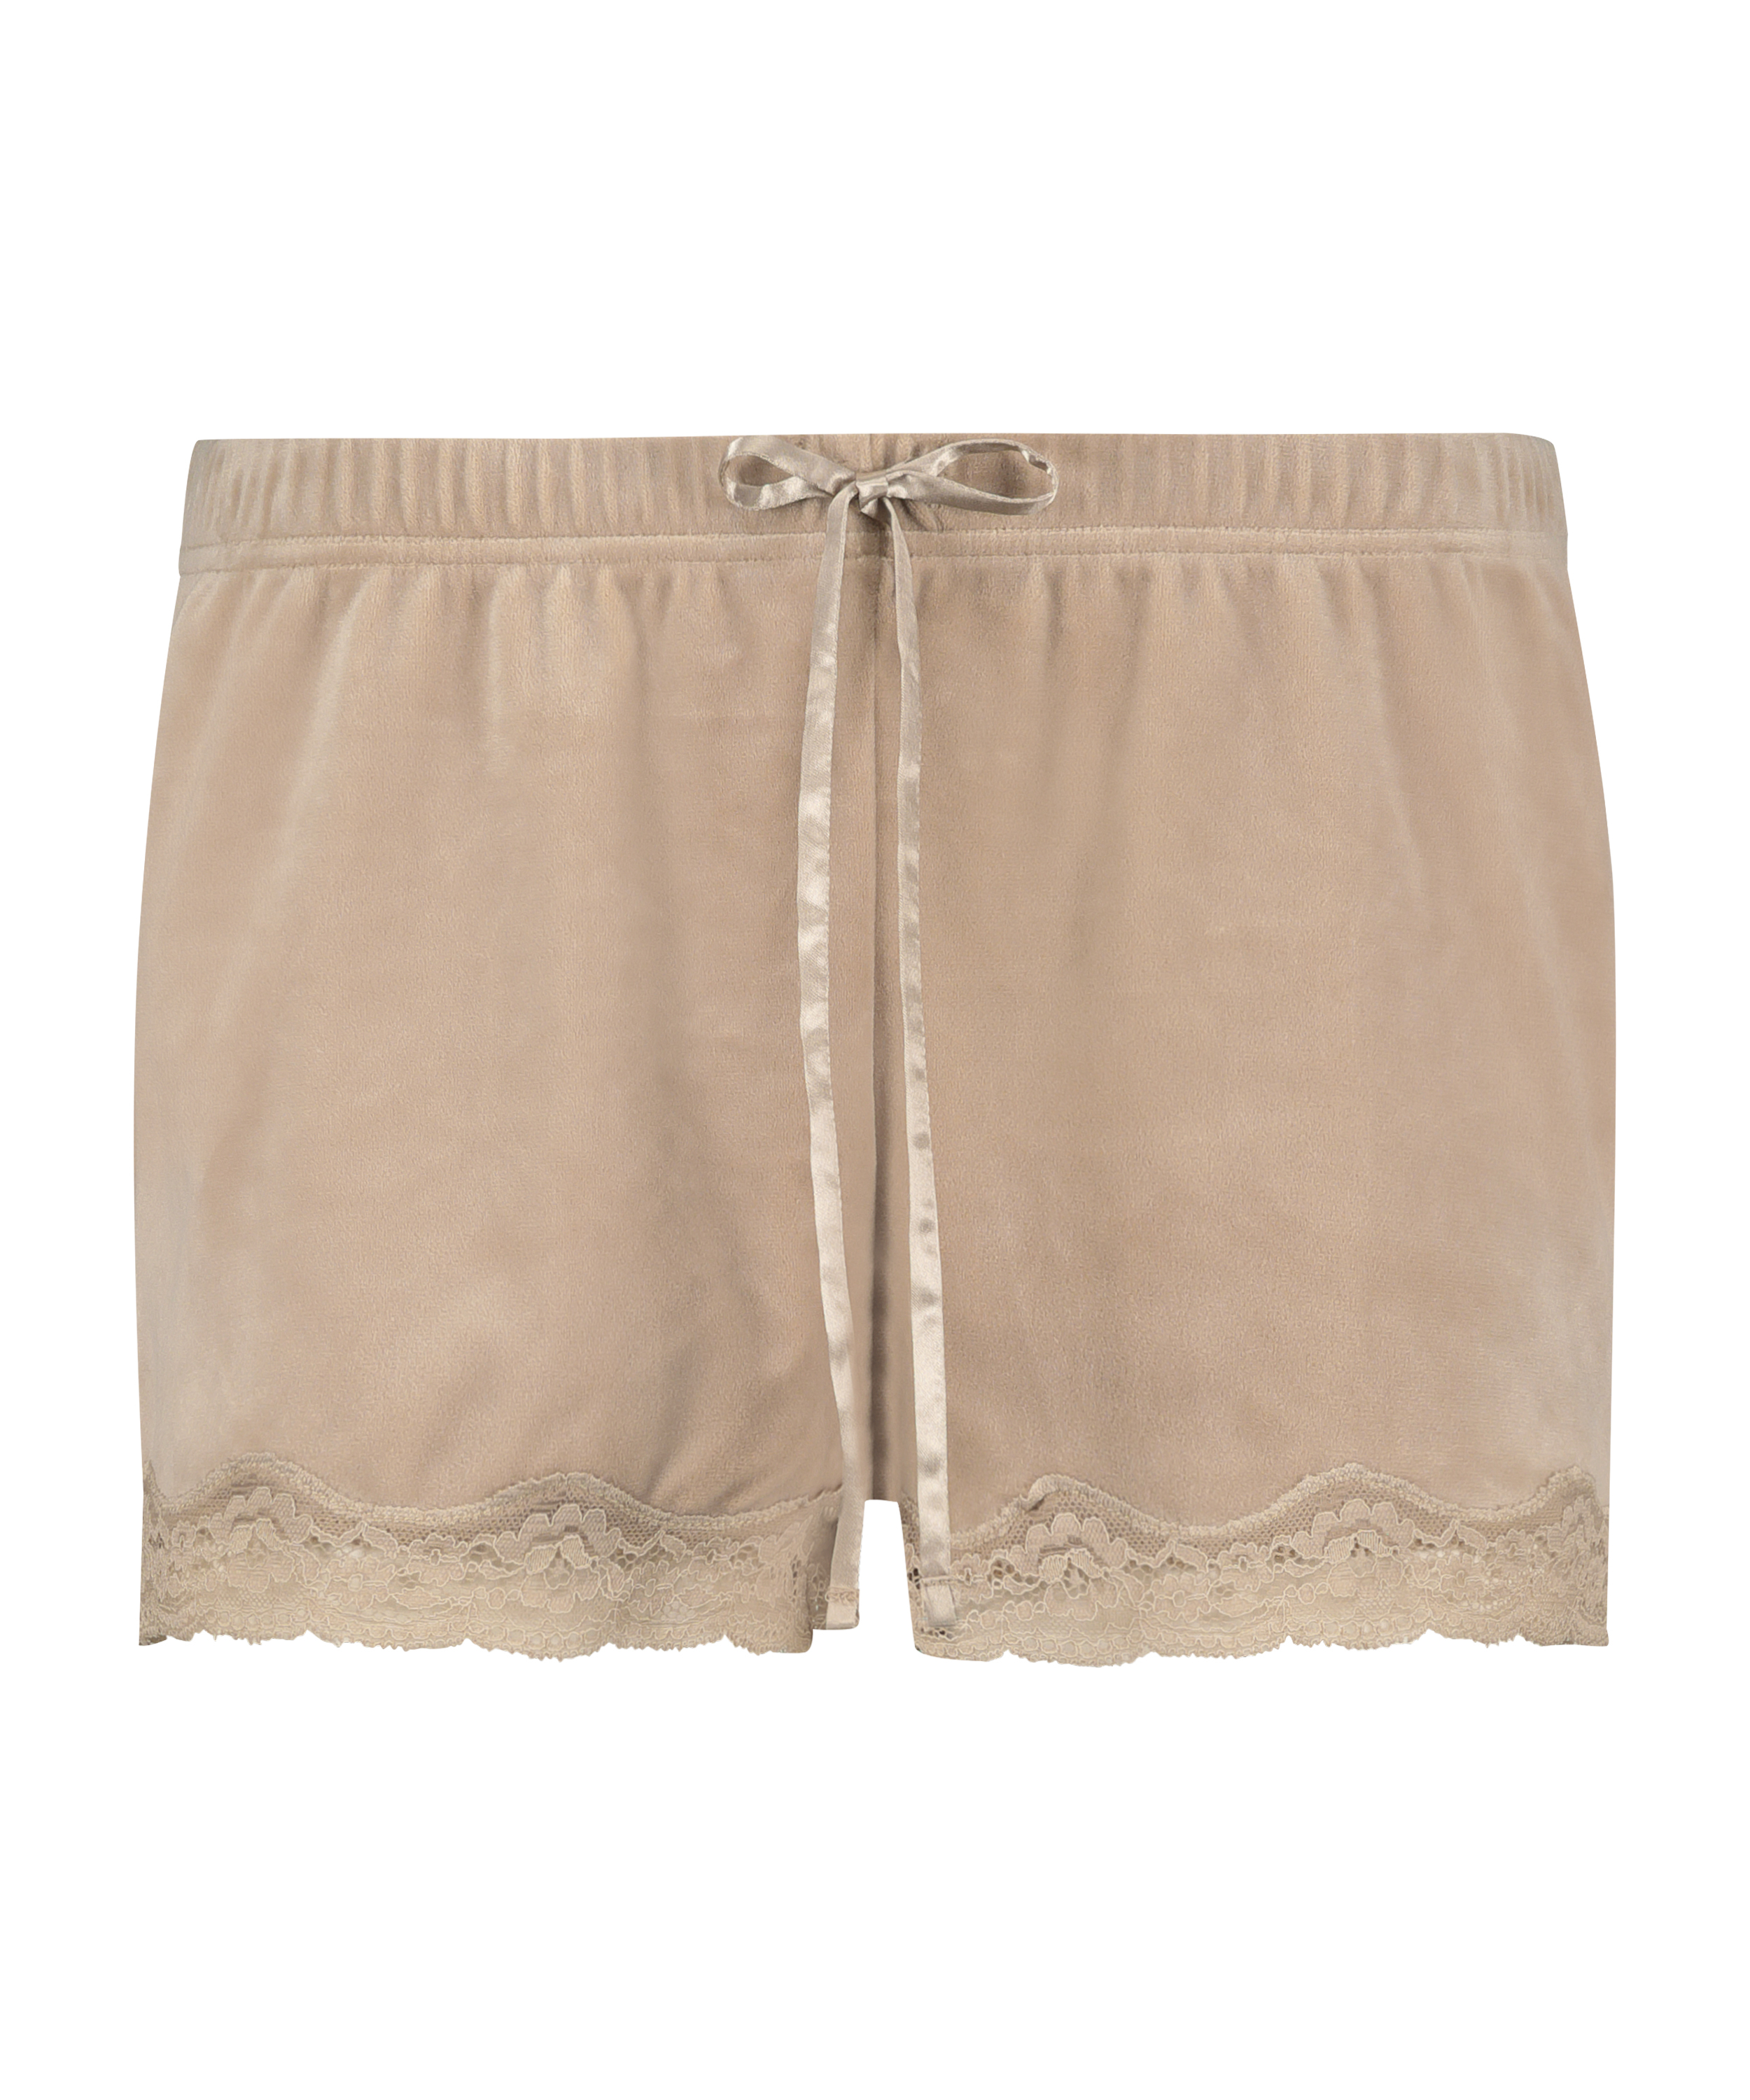 Velvet lace shorts, Beige, main